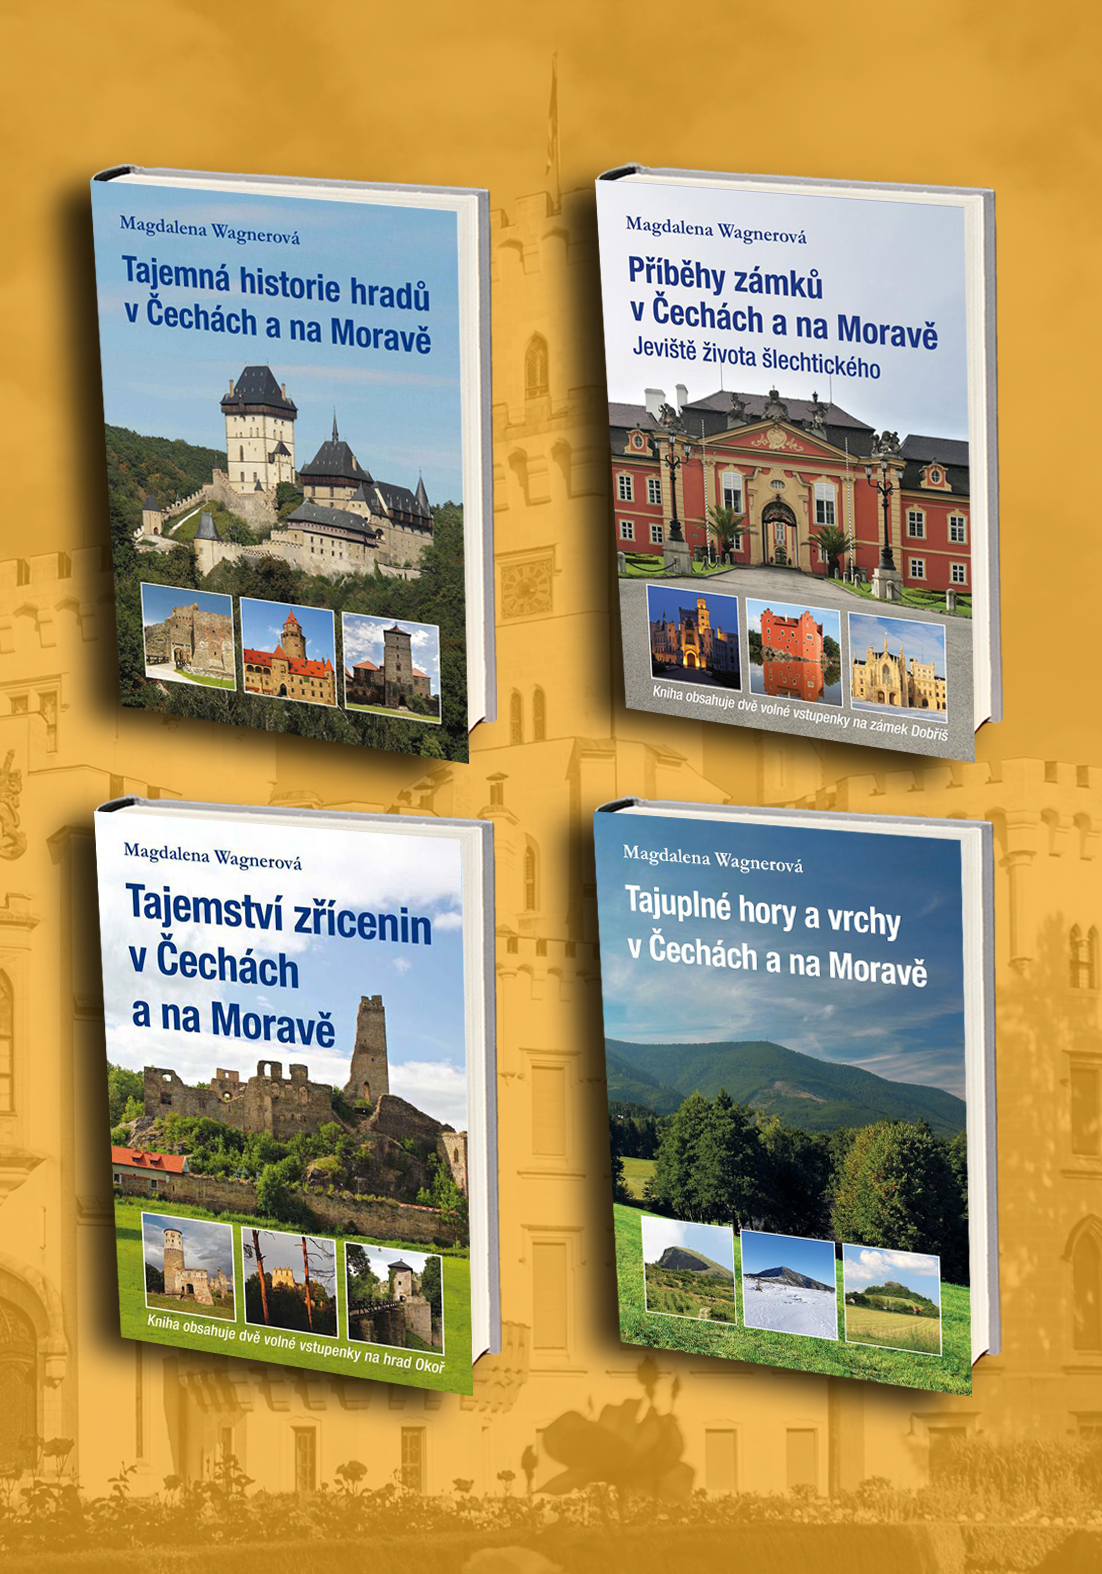 Komplet turistických knih v akci